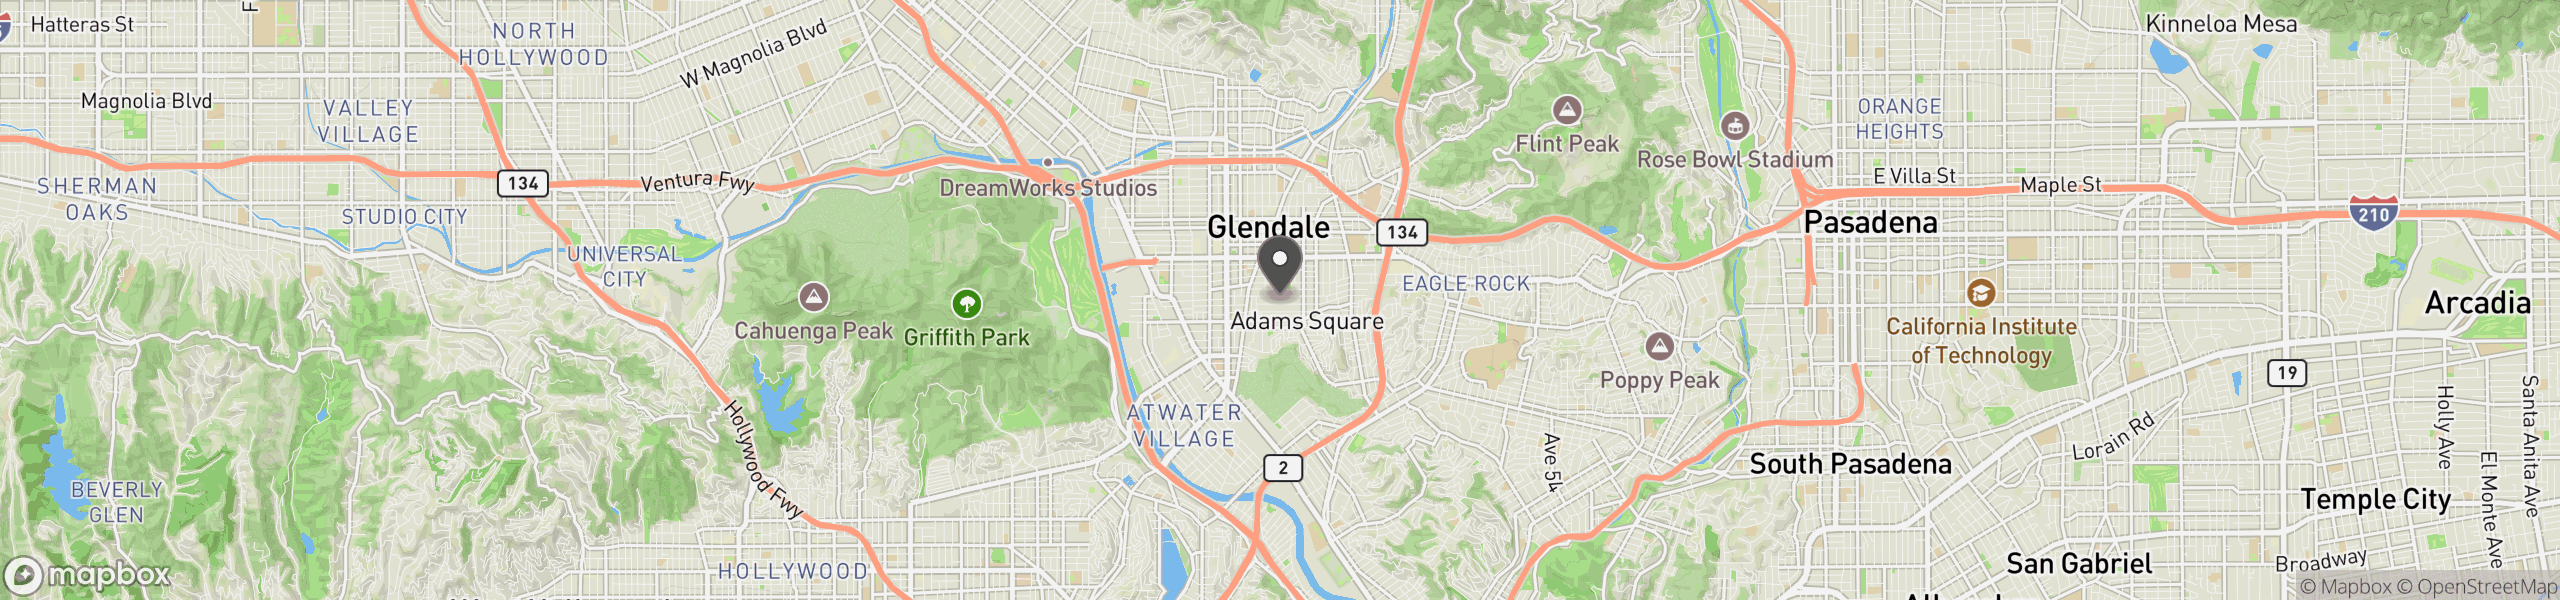 Glendale, CA 91205